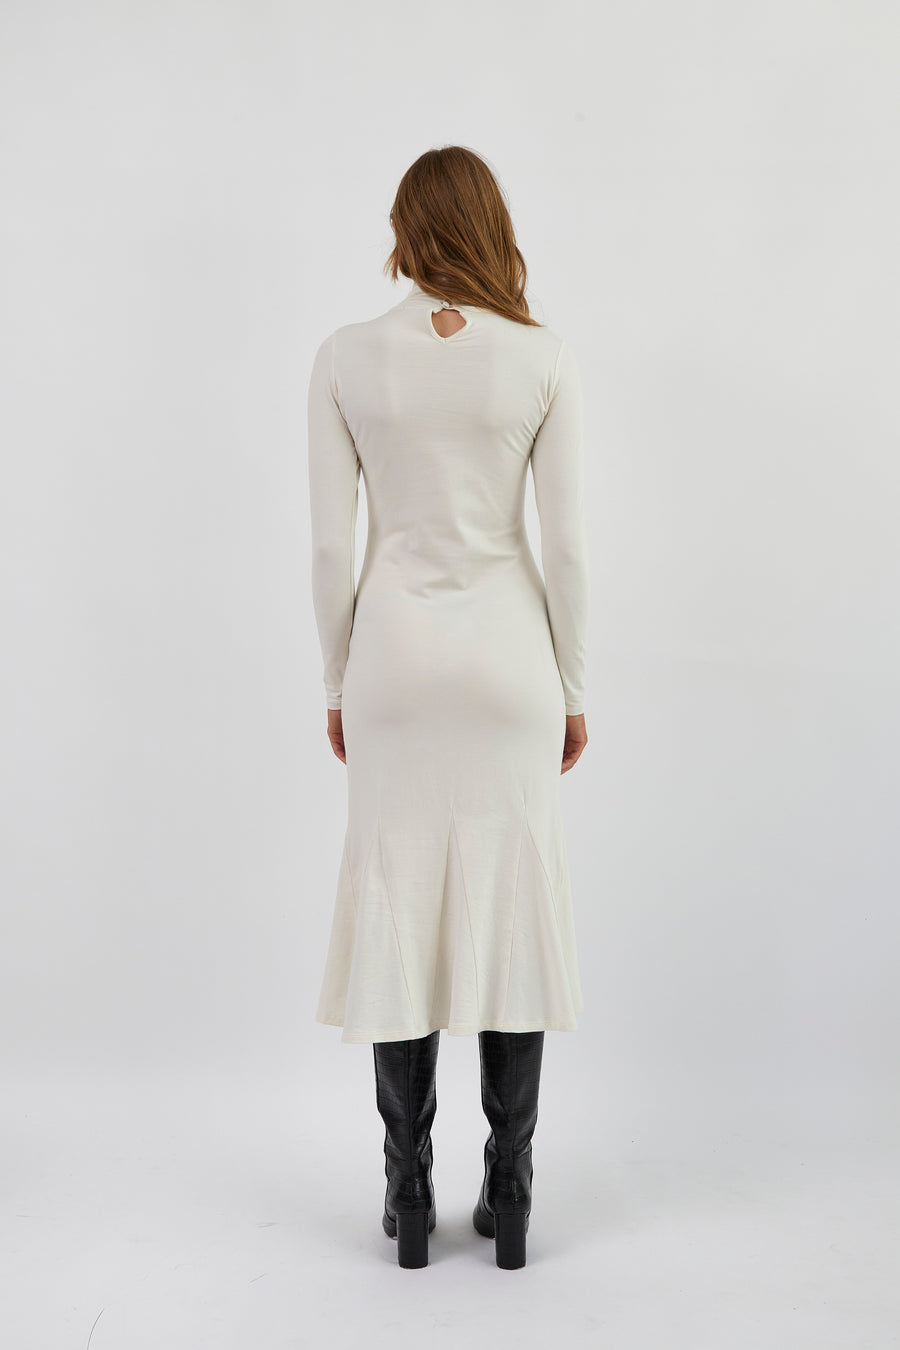 Melancolia Light white dress